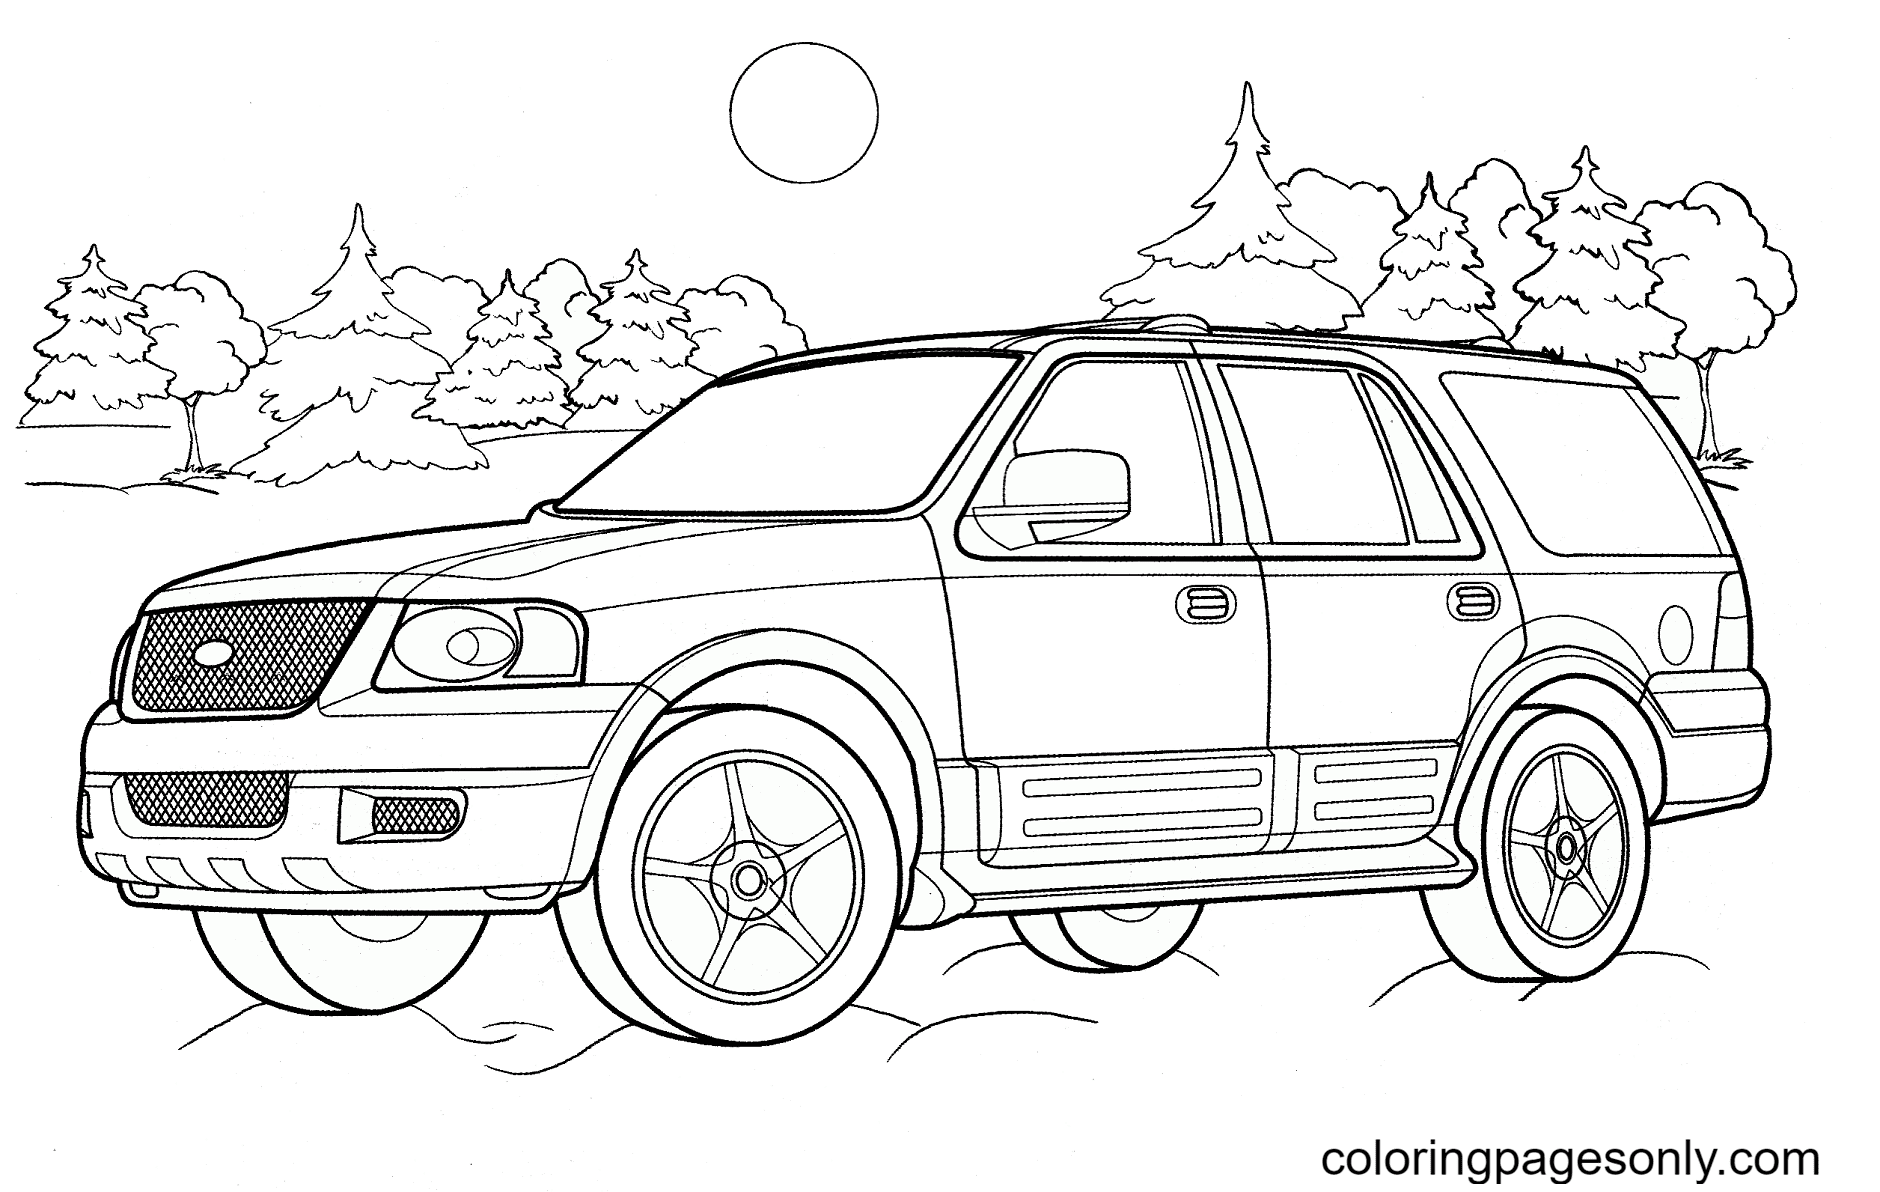 Раскраска Jeep Grand Cherokee